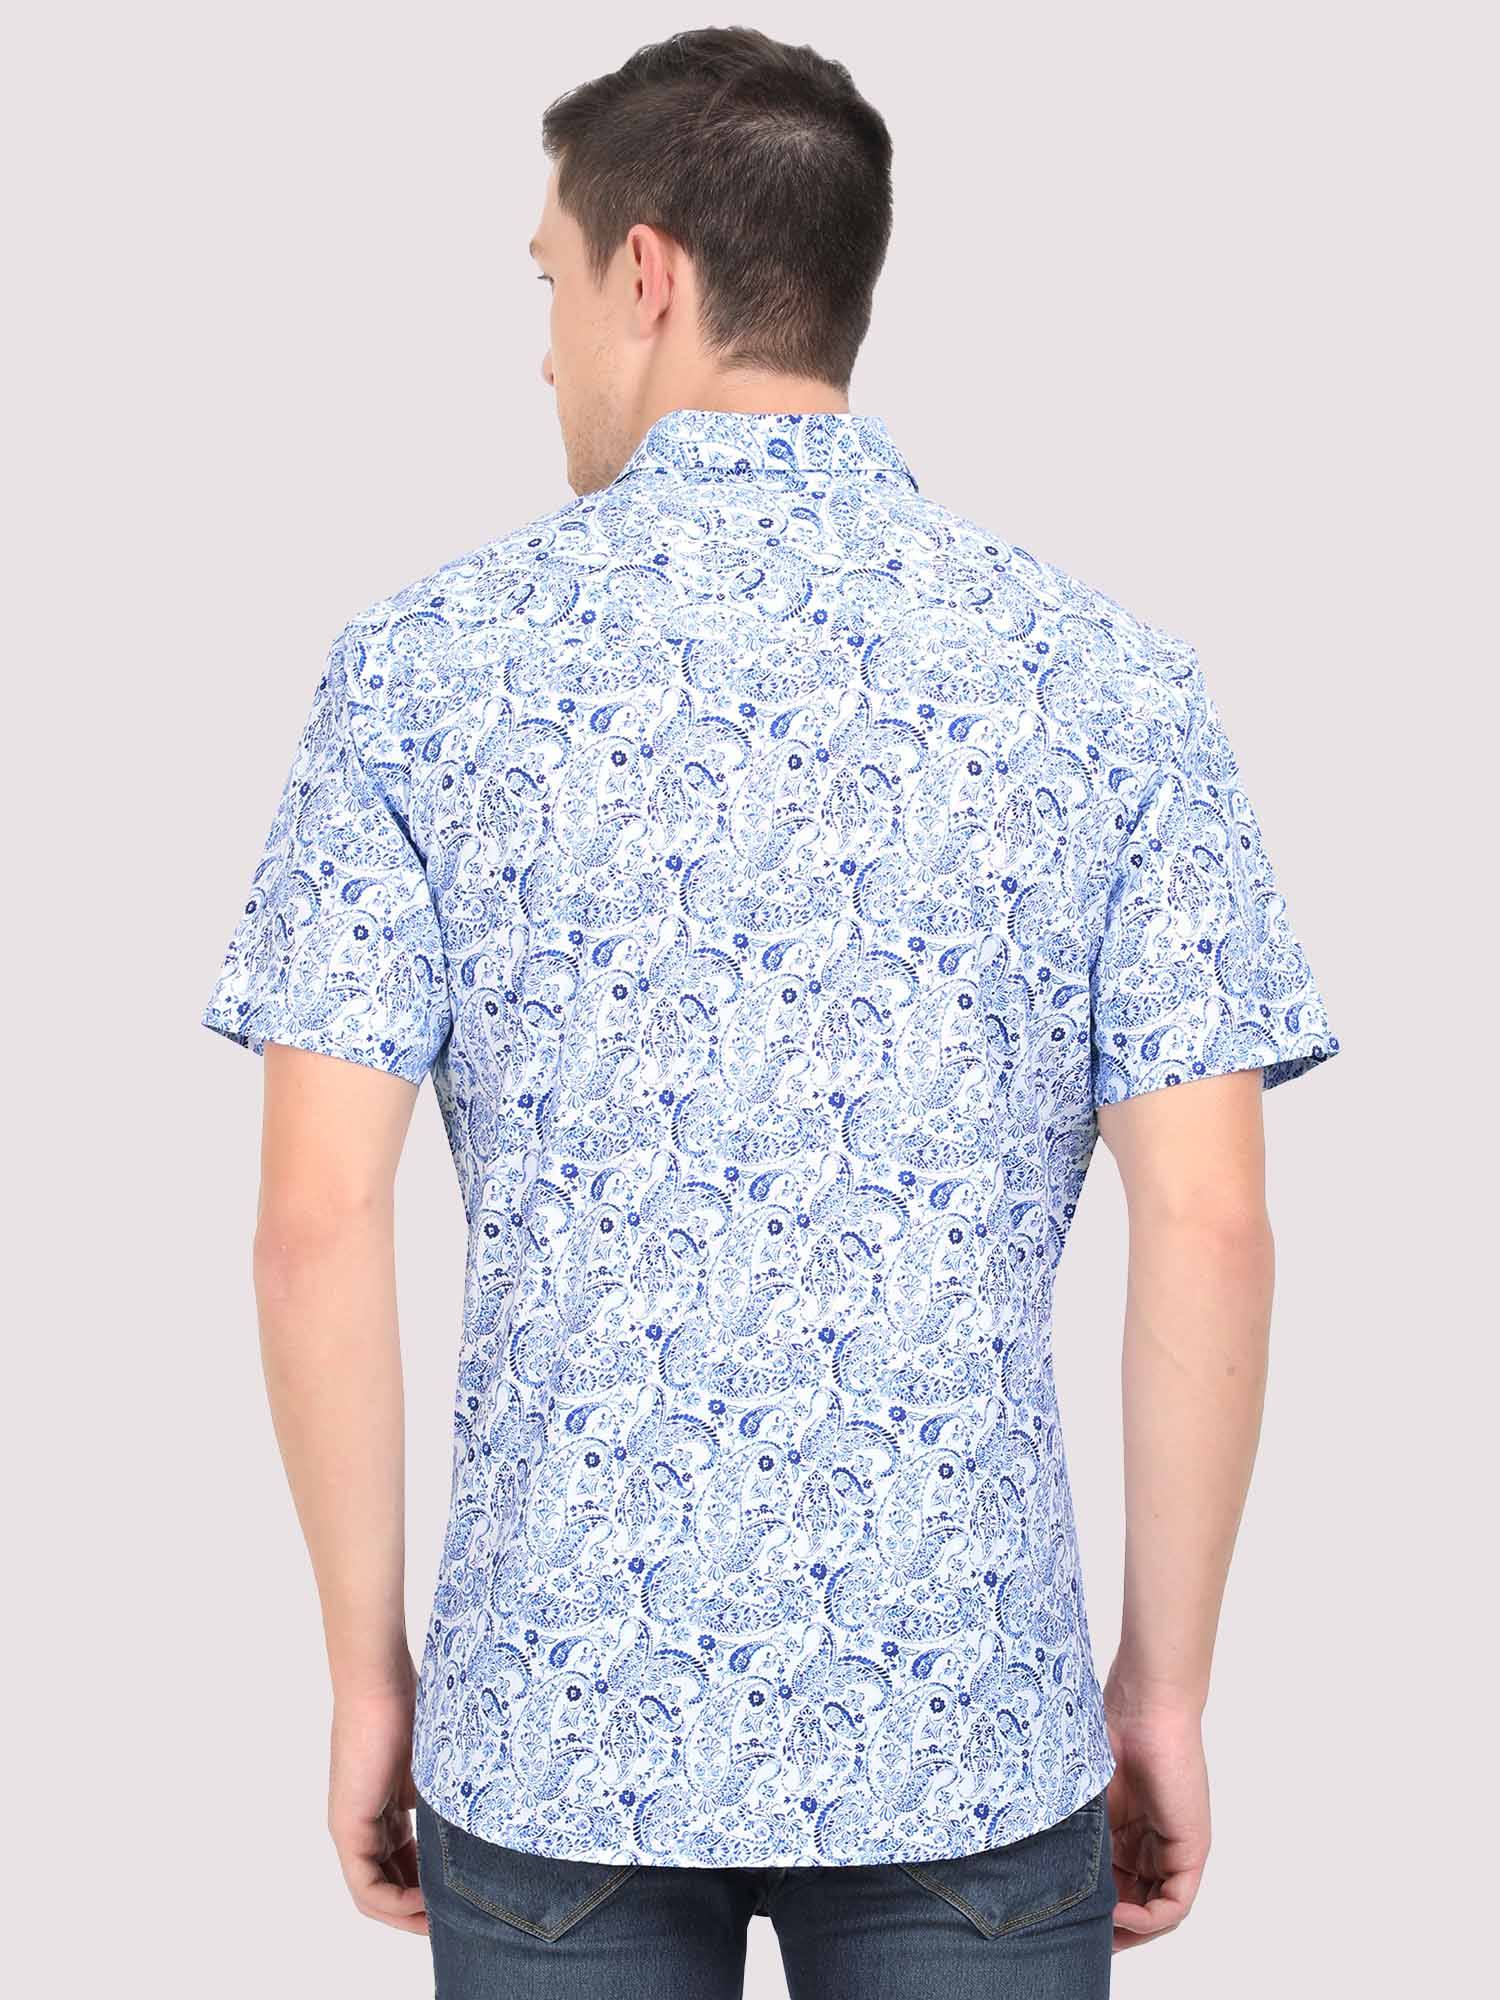 Indigo Paisley Digital Printed Half Shirt - Guniaa Fashions